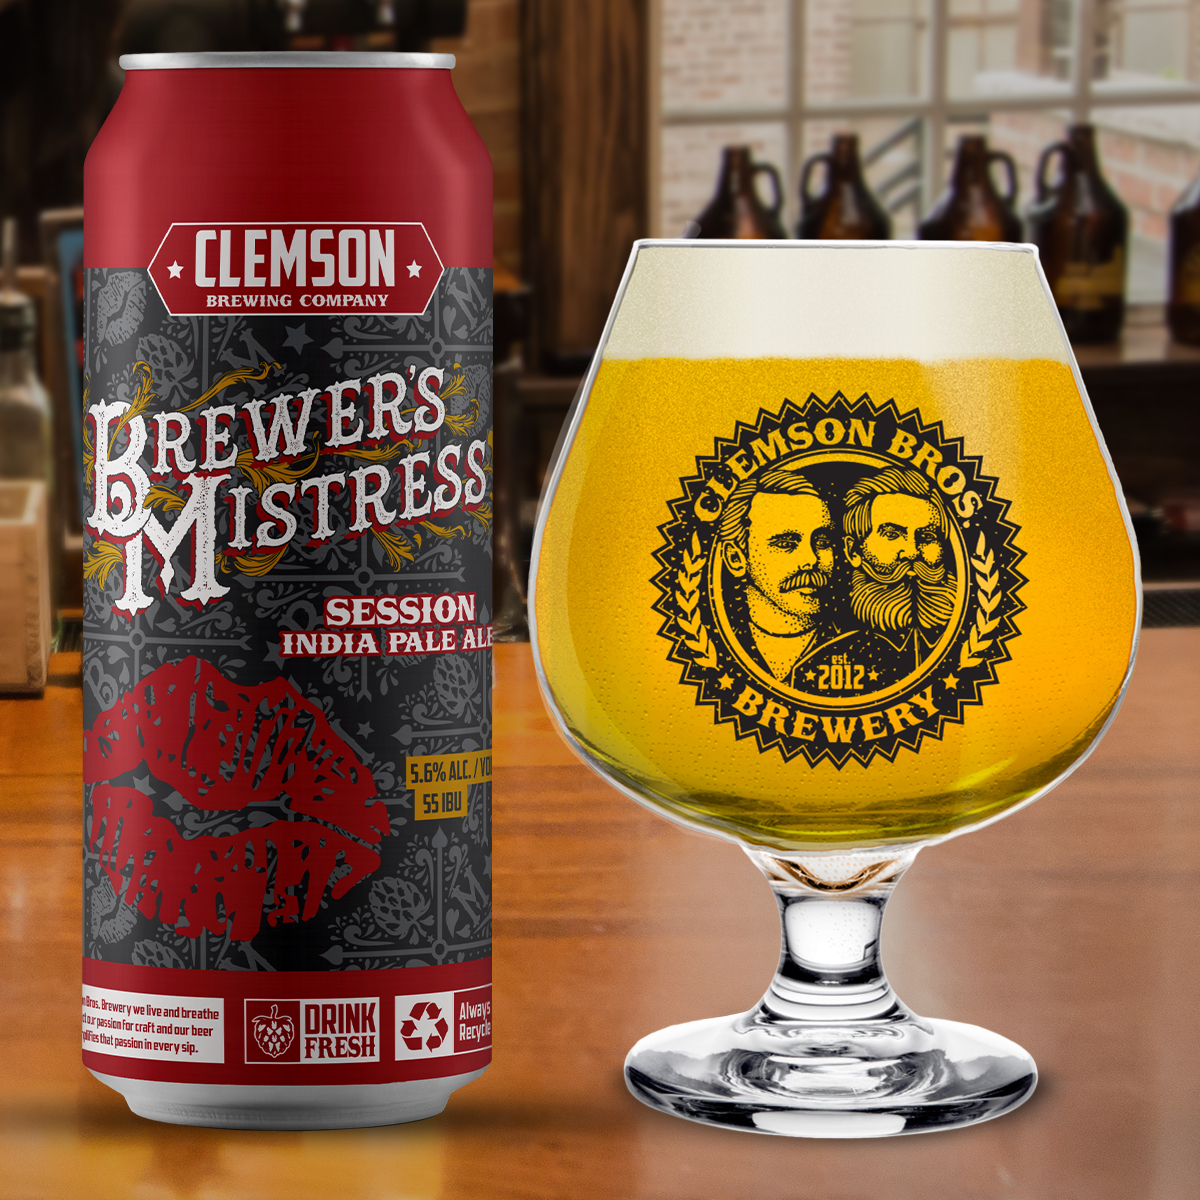 Clemson Bros. Brewery 'Brewer's Mistress' Label